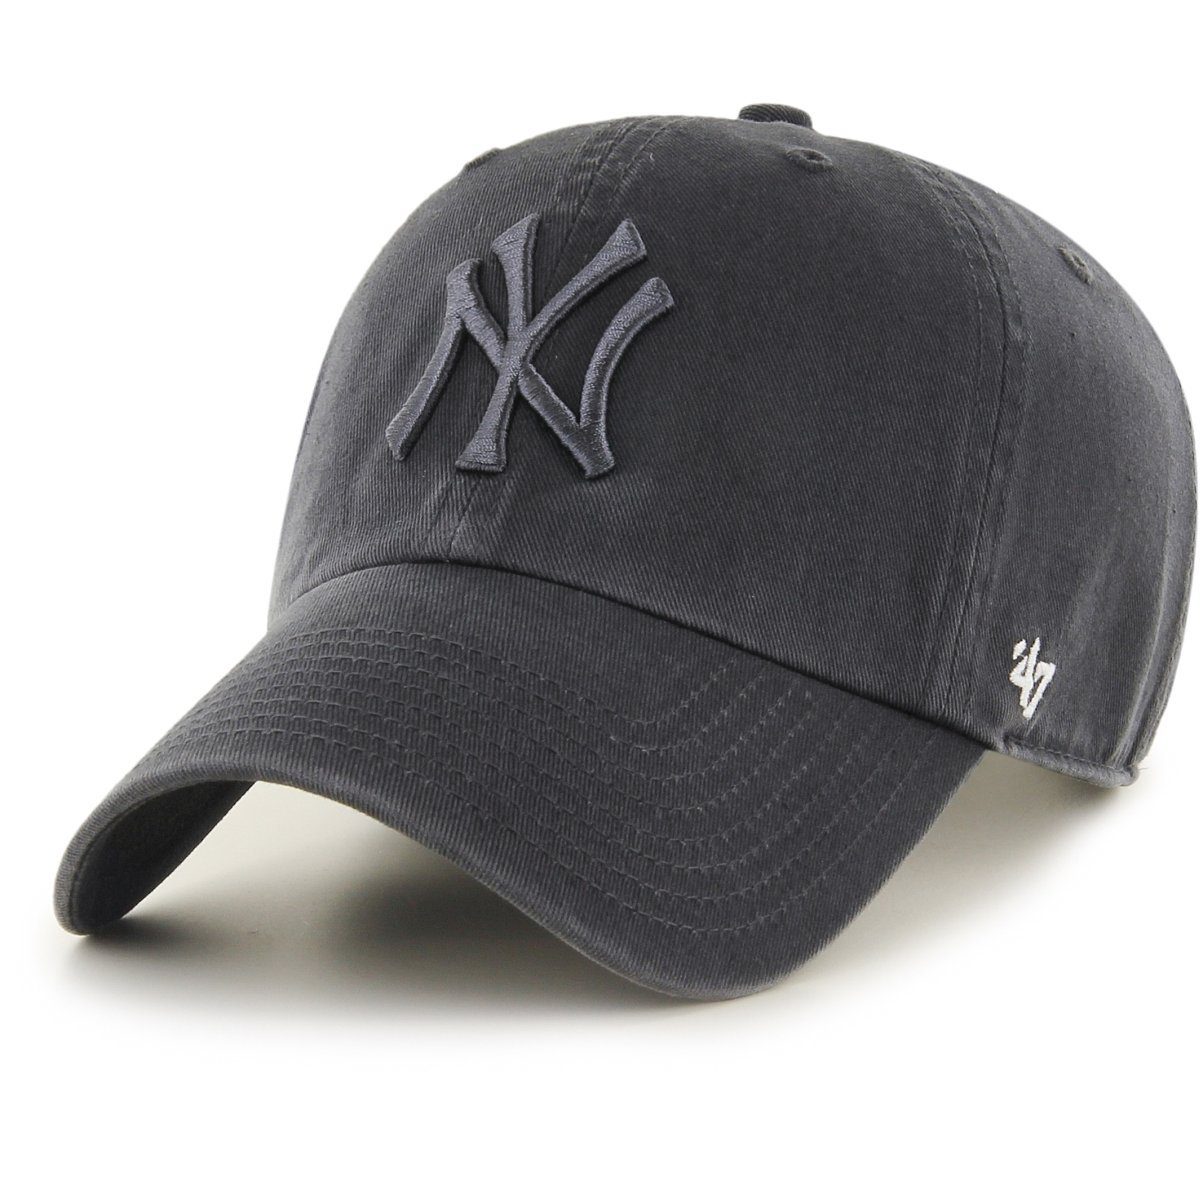 x27;47 Brand Baseball Cap CLEAN Yankees NY UP